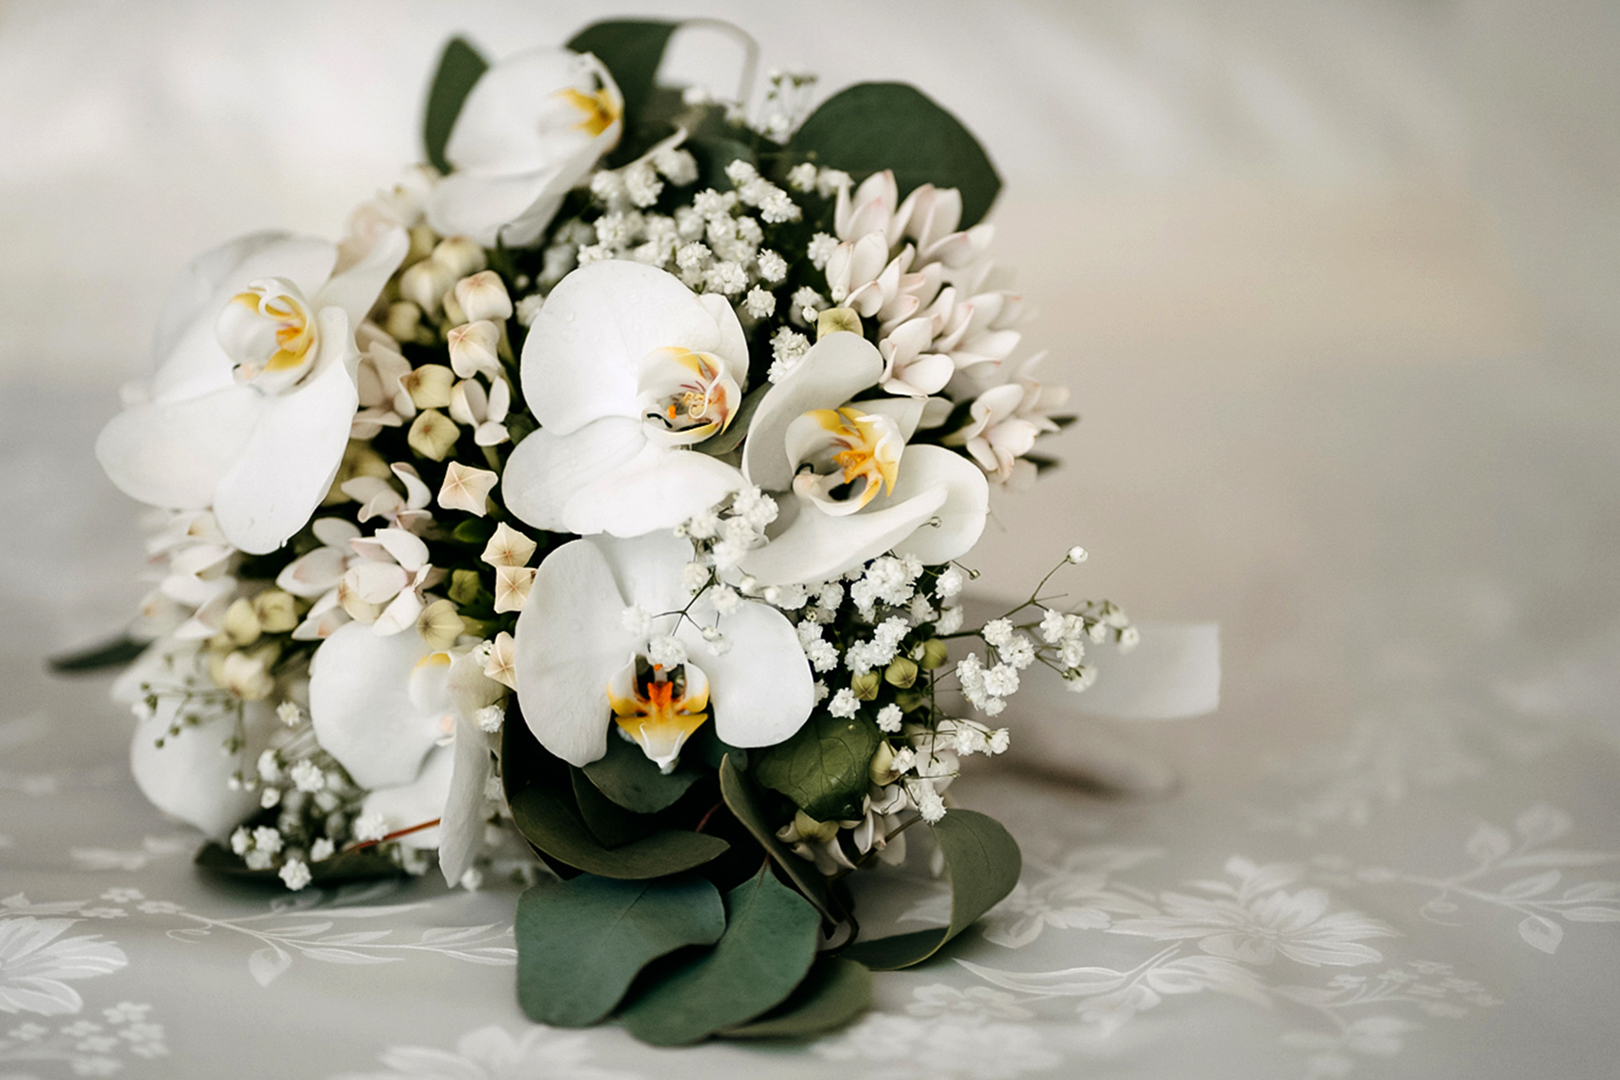 5 gianni-lepore-bouquet-sposa